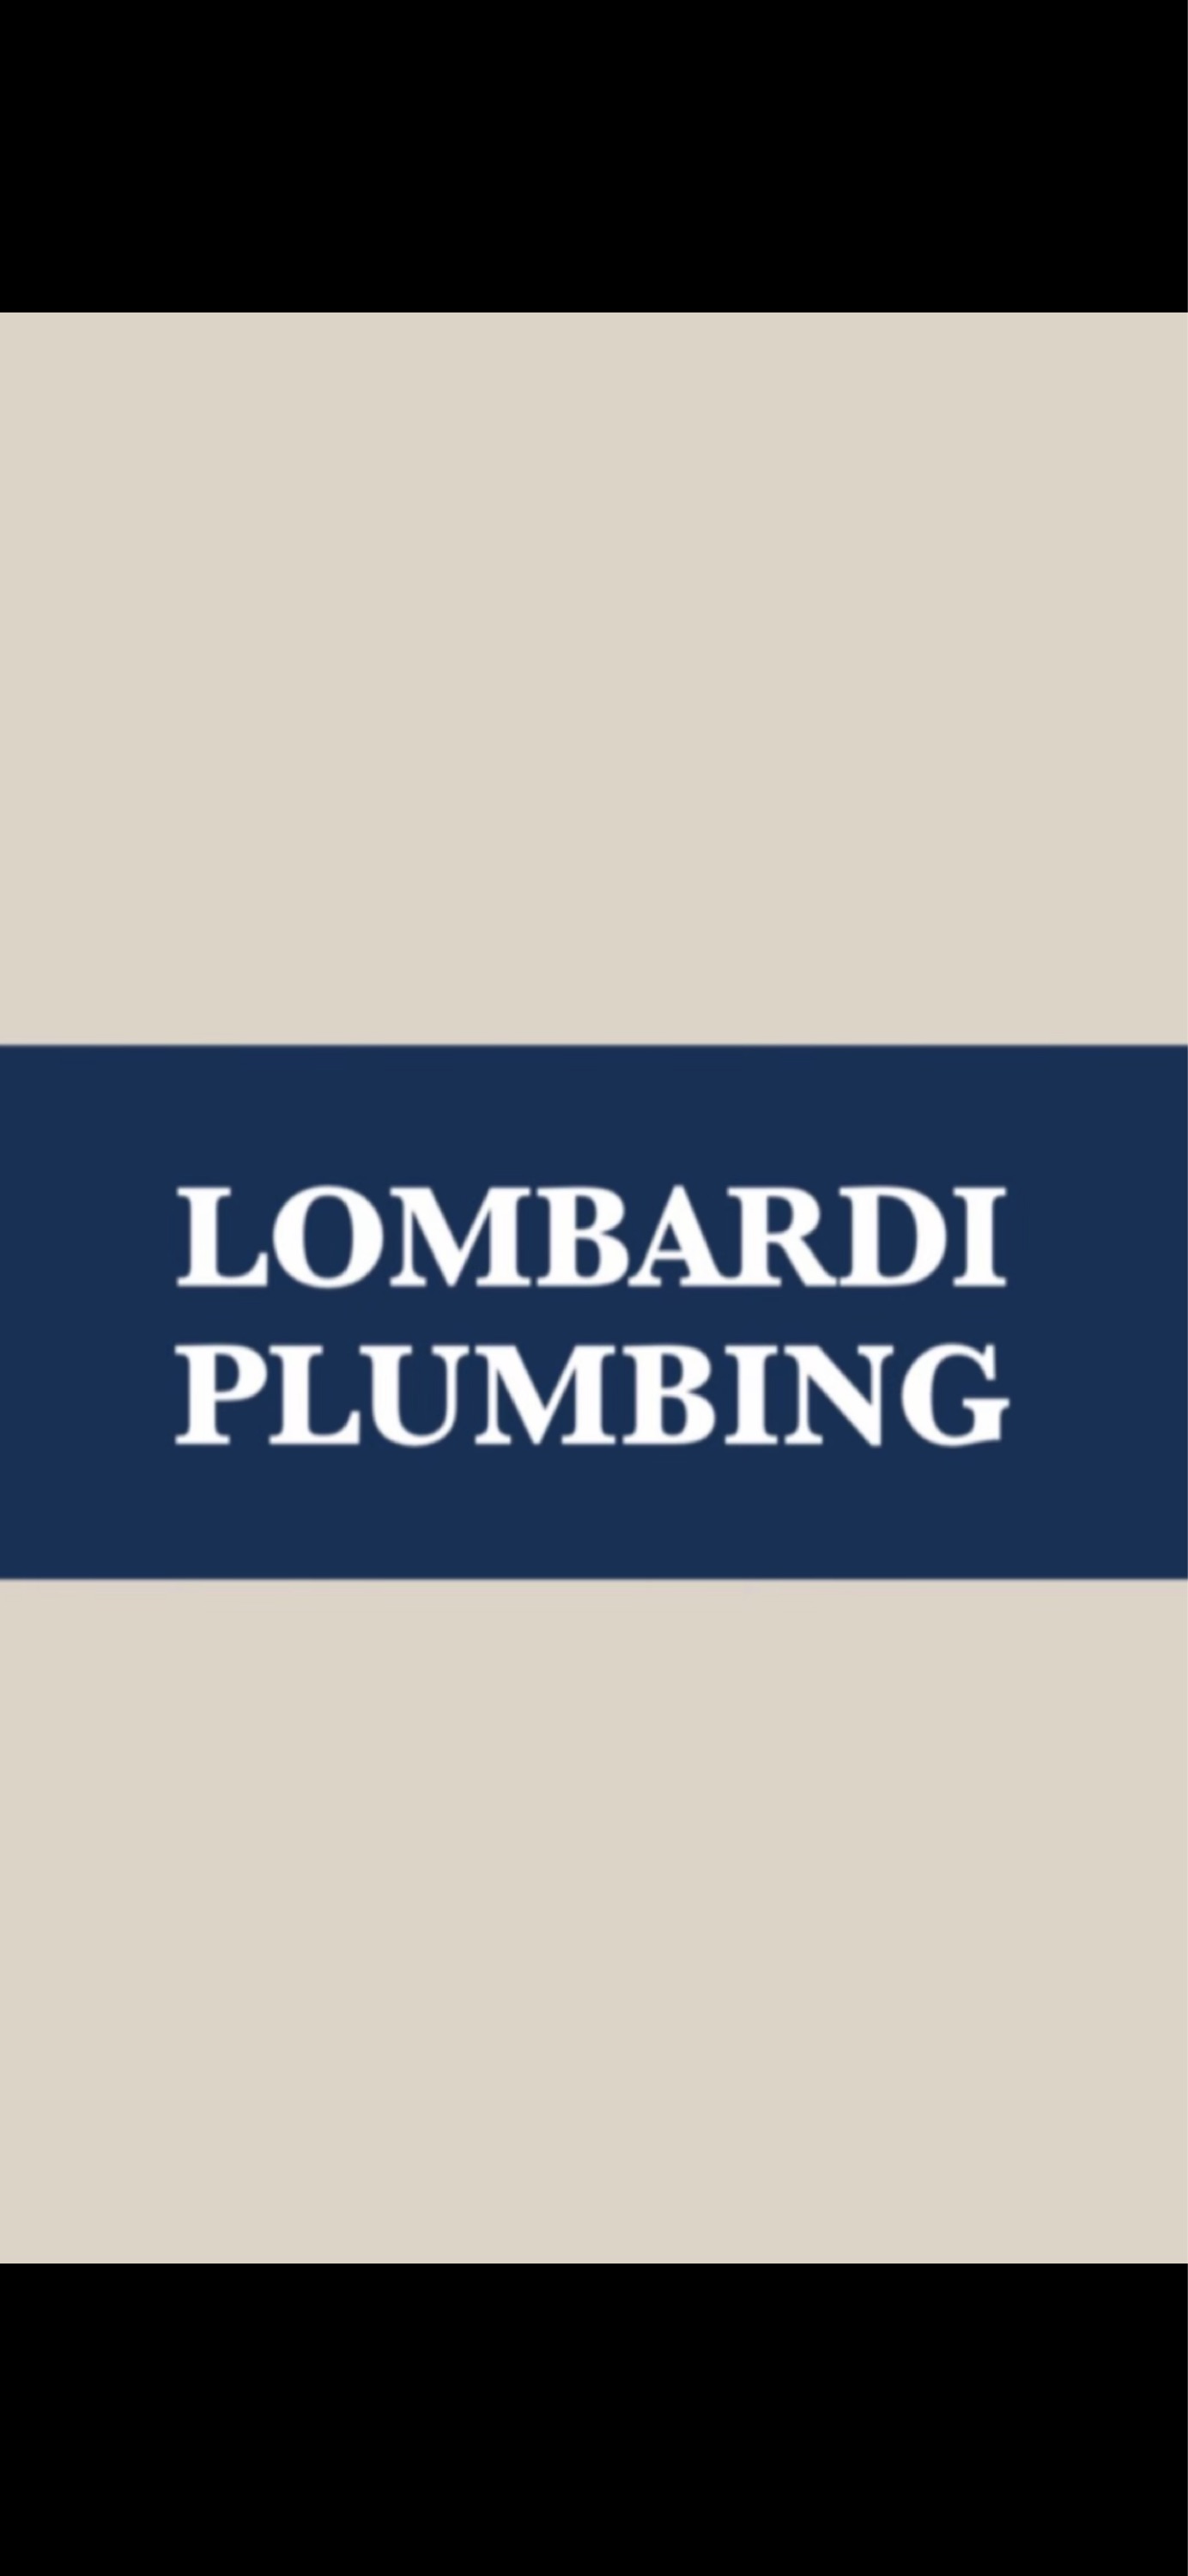 Lombardi Plumbing Logo